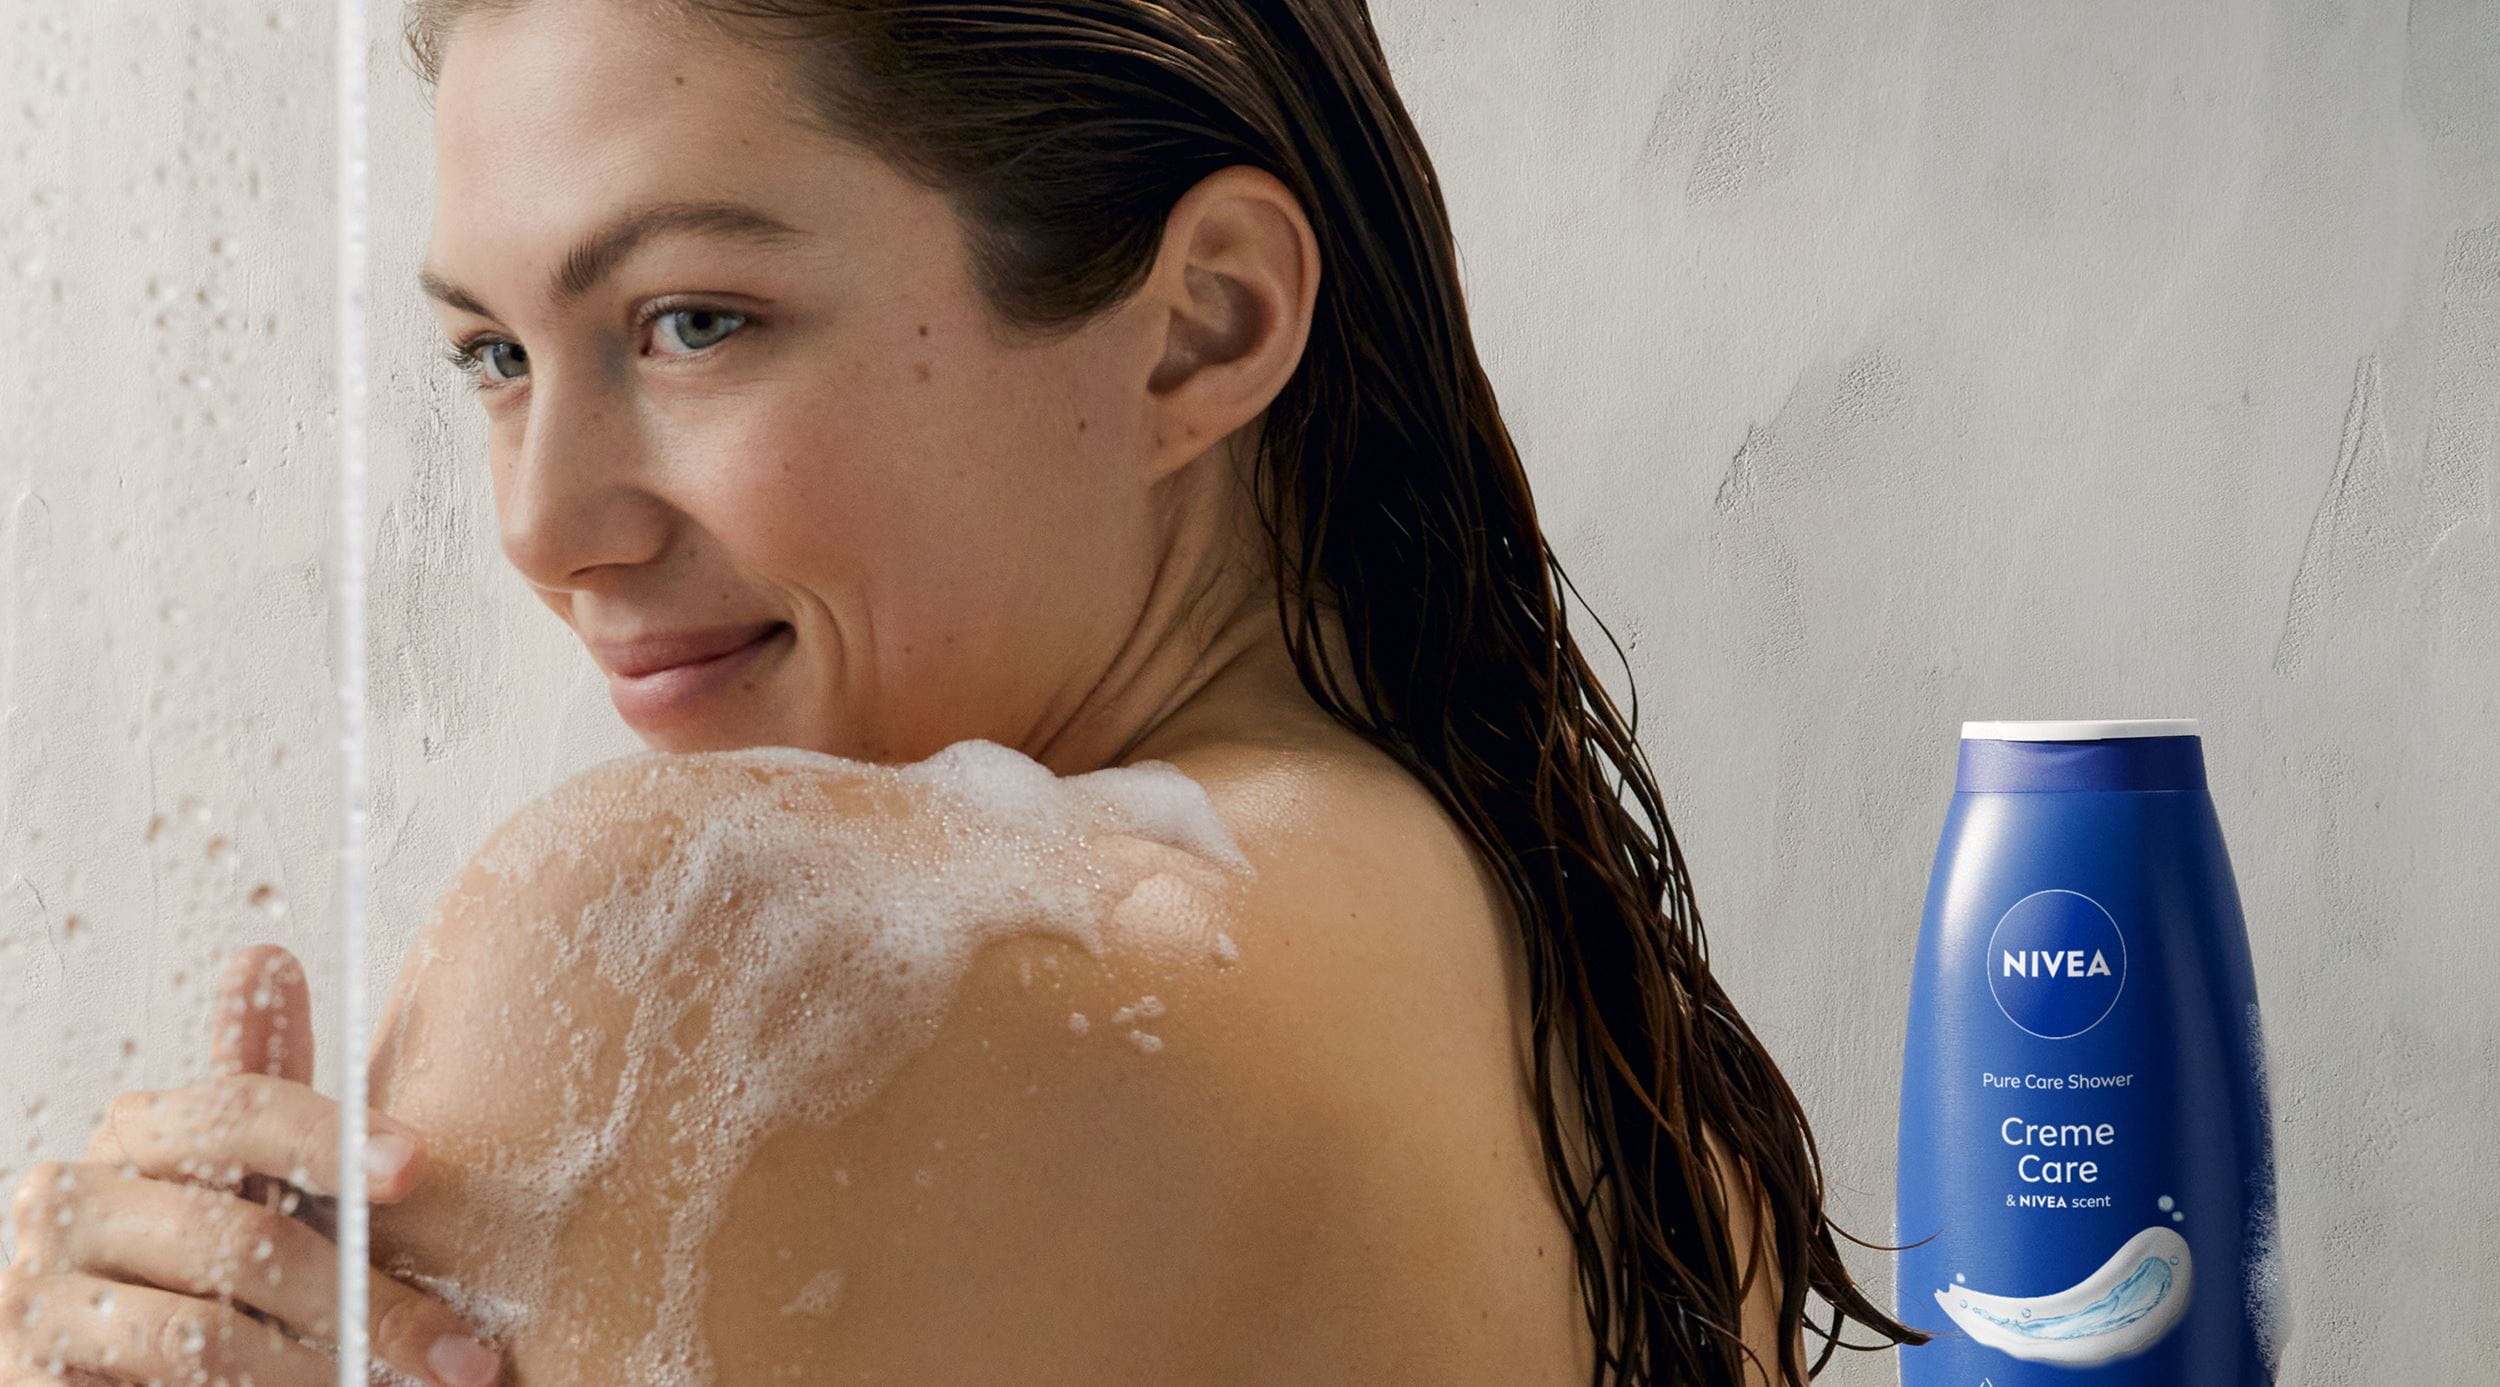 young woman using Nivea shower gel